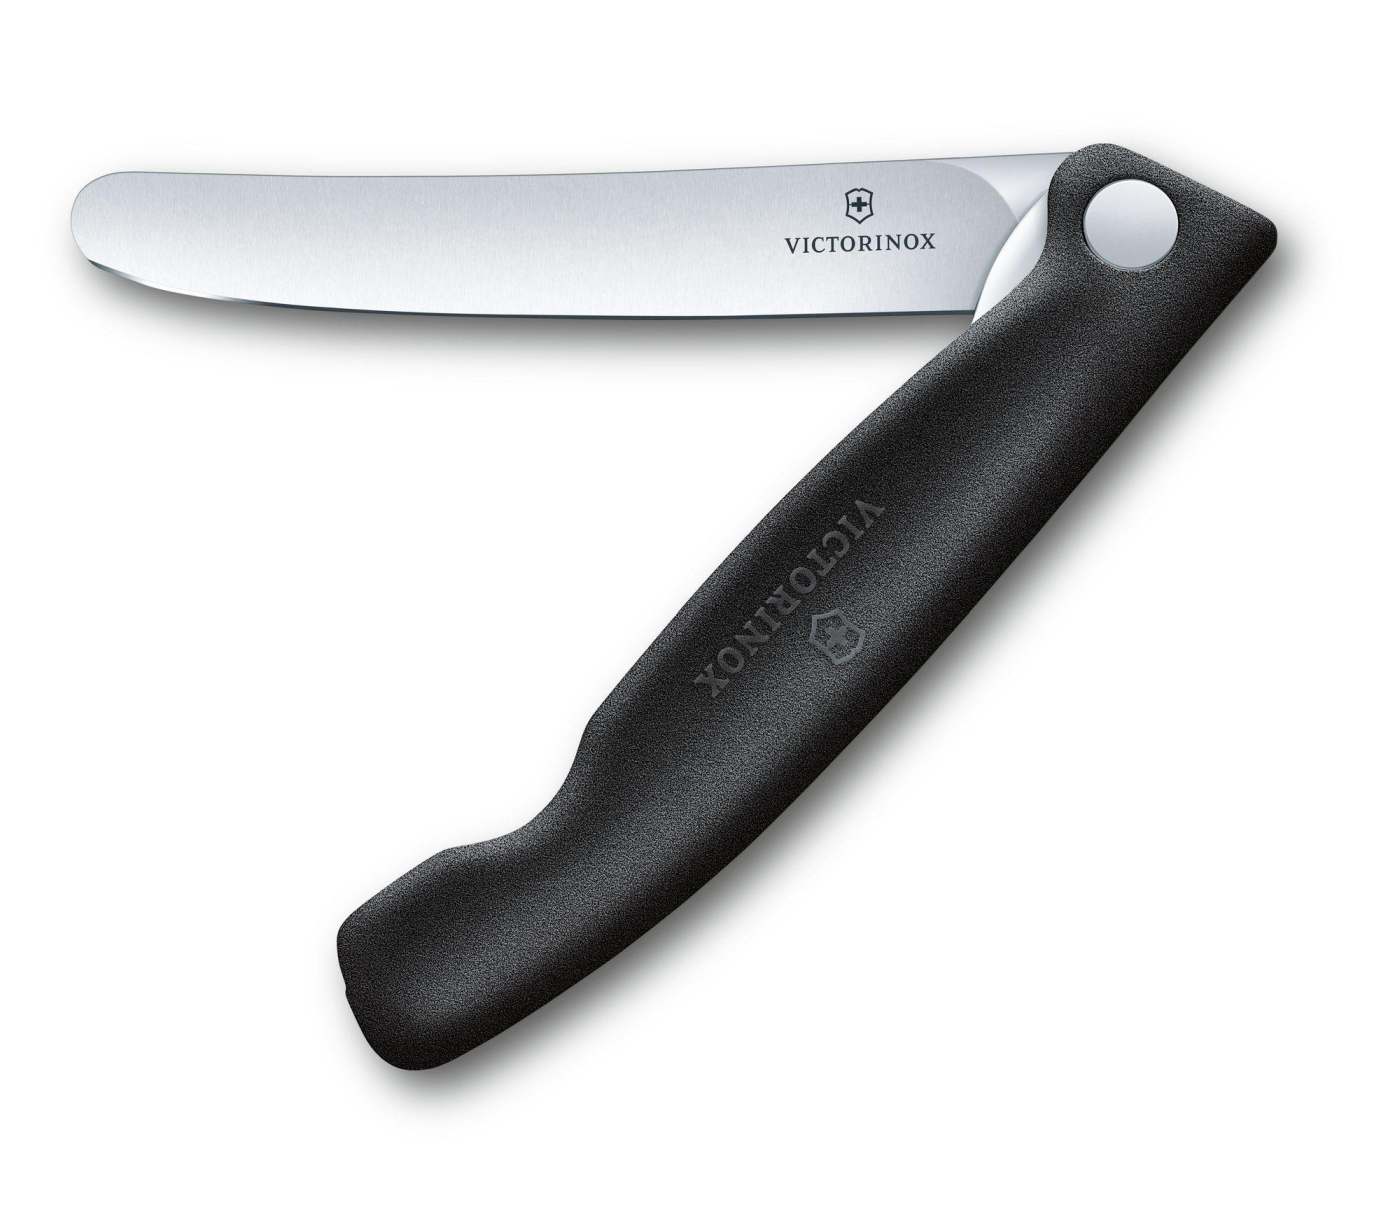 Skládací svačinový nůž SWISS CLASSIC s rovným ostřím černý - Victorinox